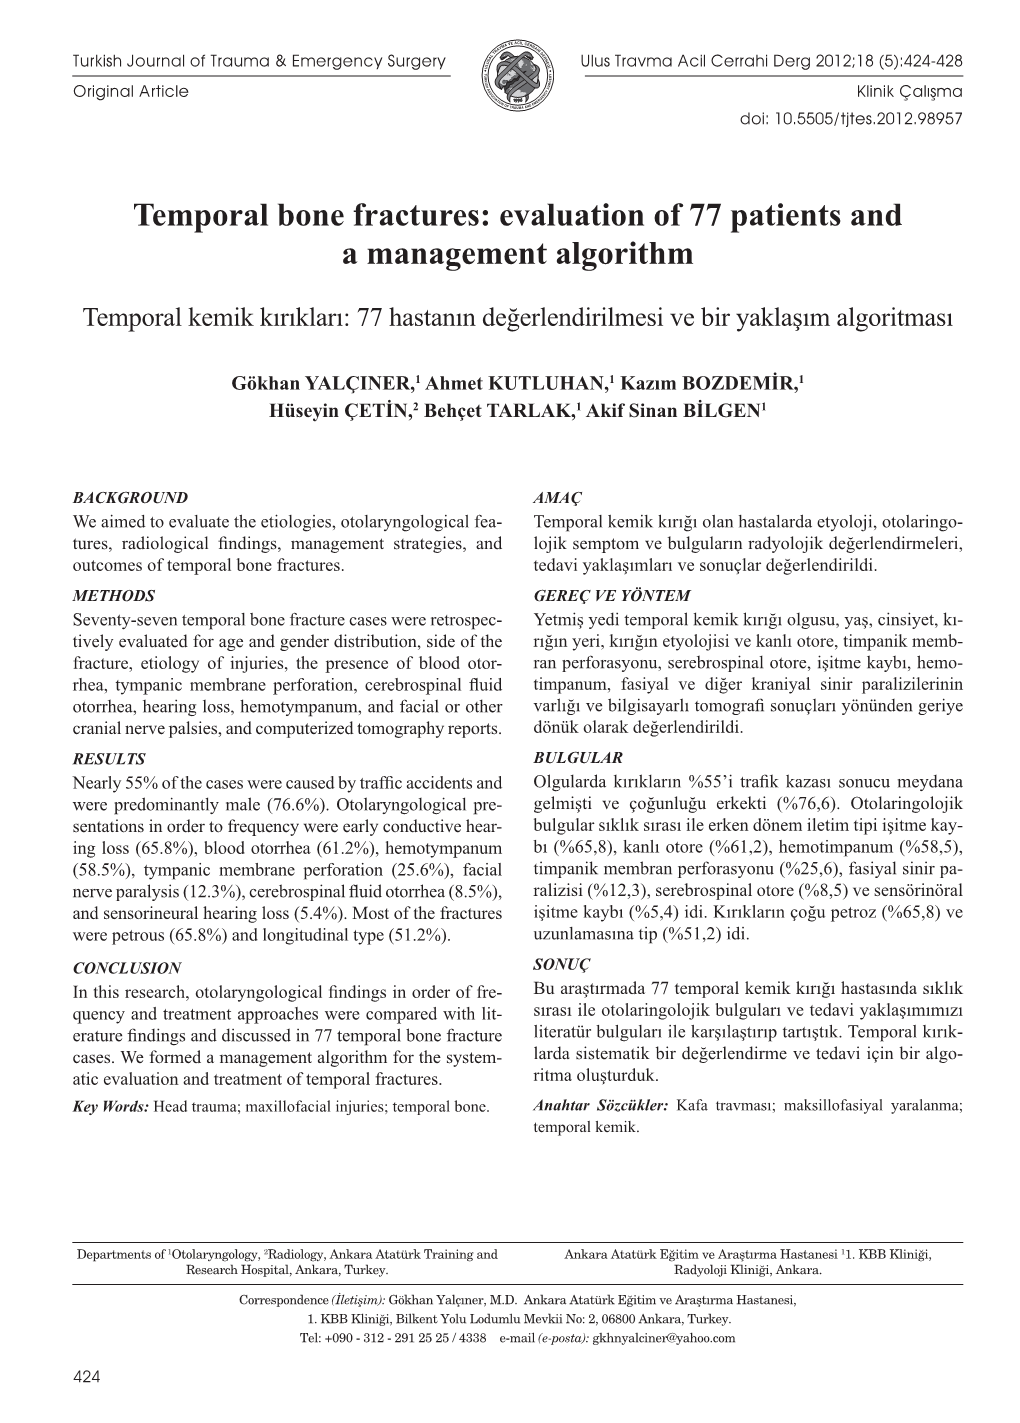 Temporal Bone Fractures: Evaluation of 77 Patients and a Management Algorithm